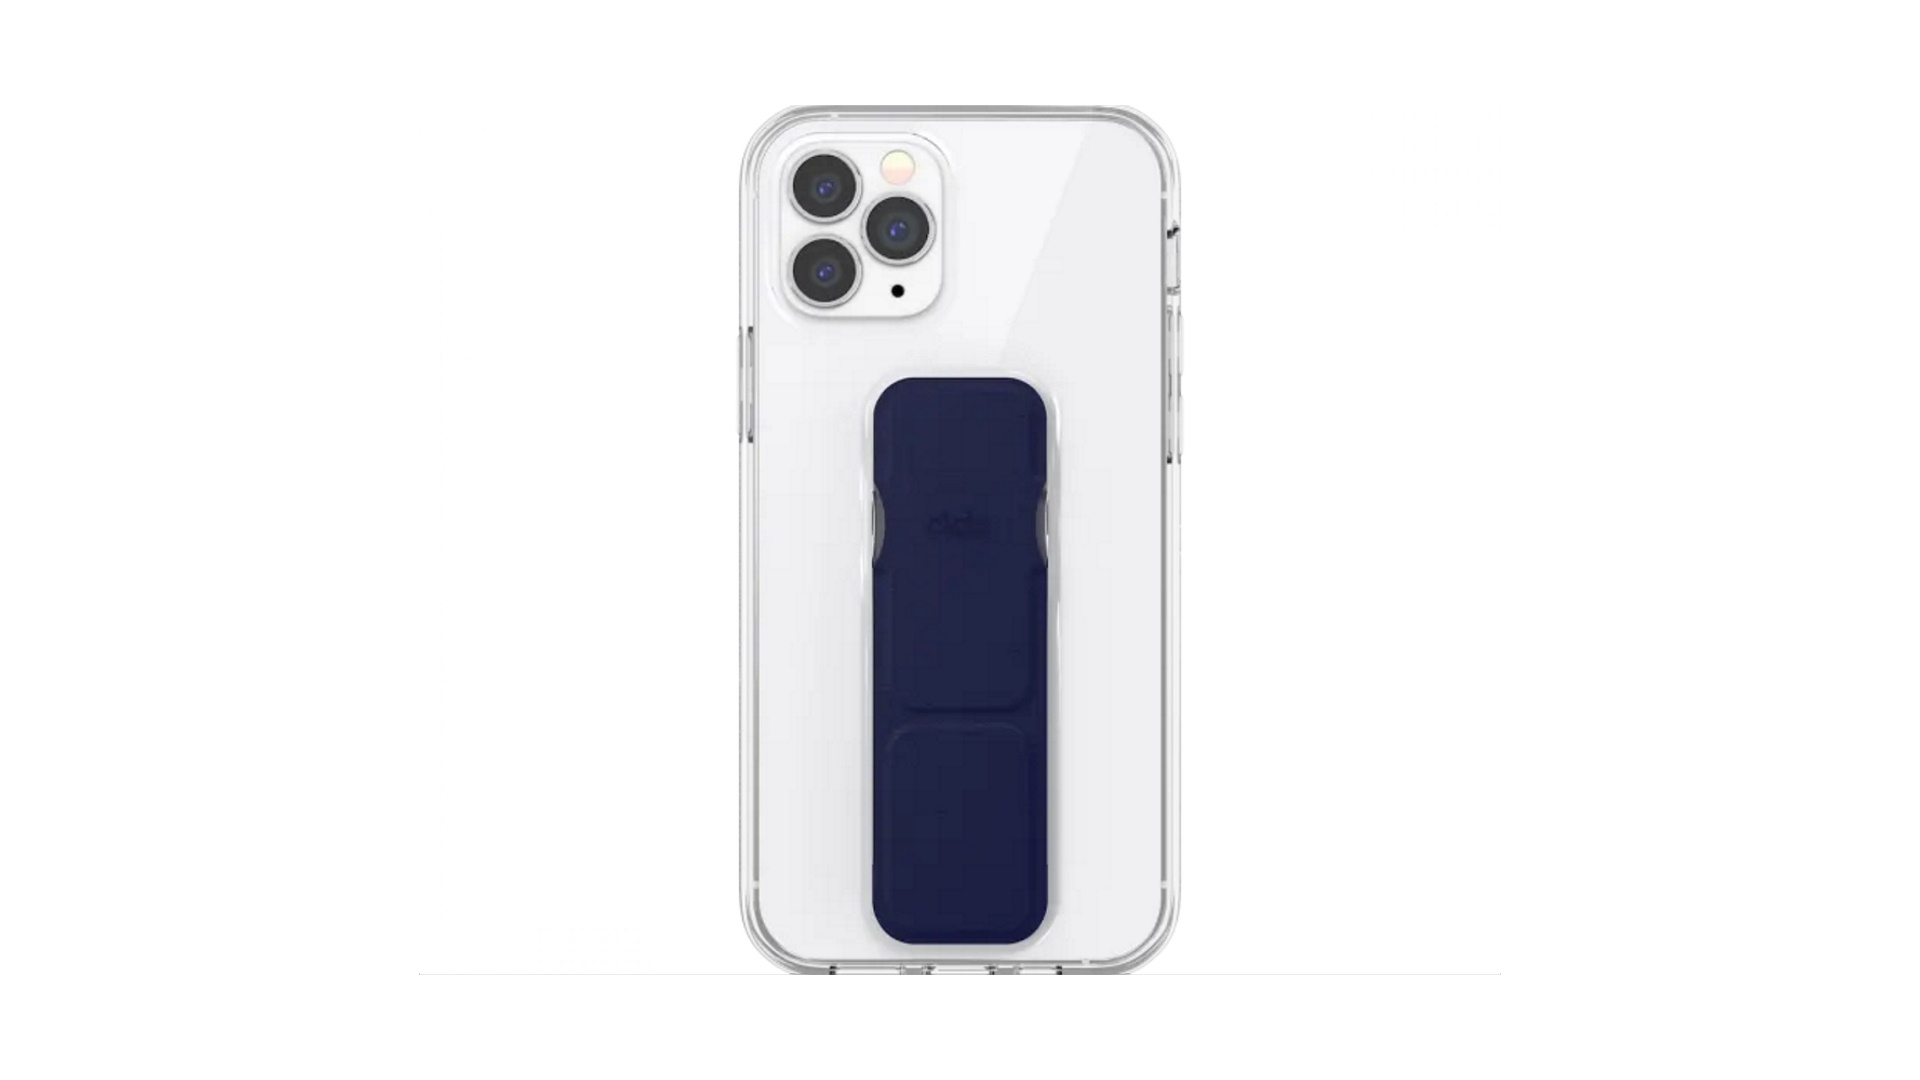 Clcker iPhone 12 Pro Max case